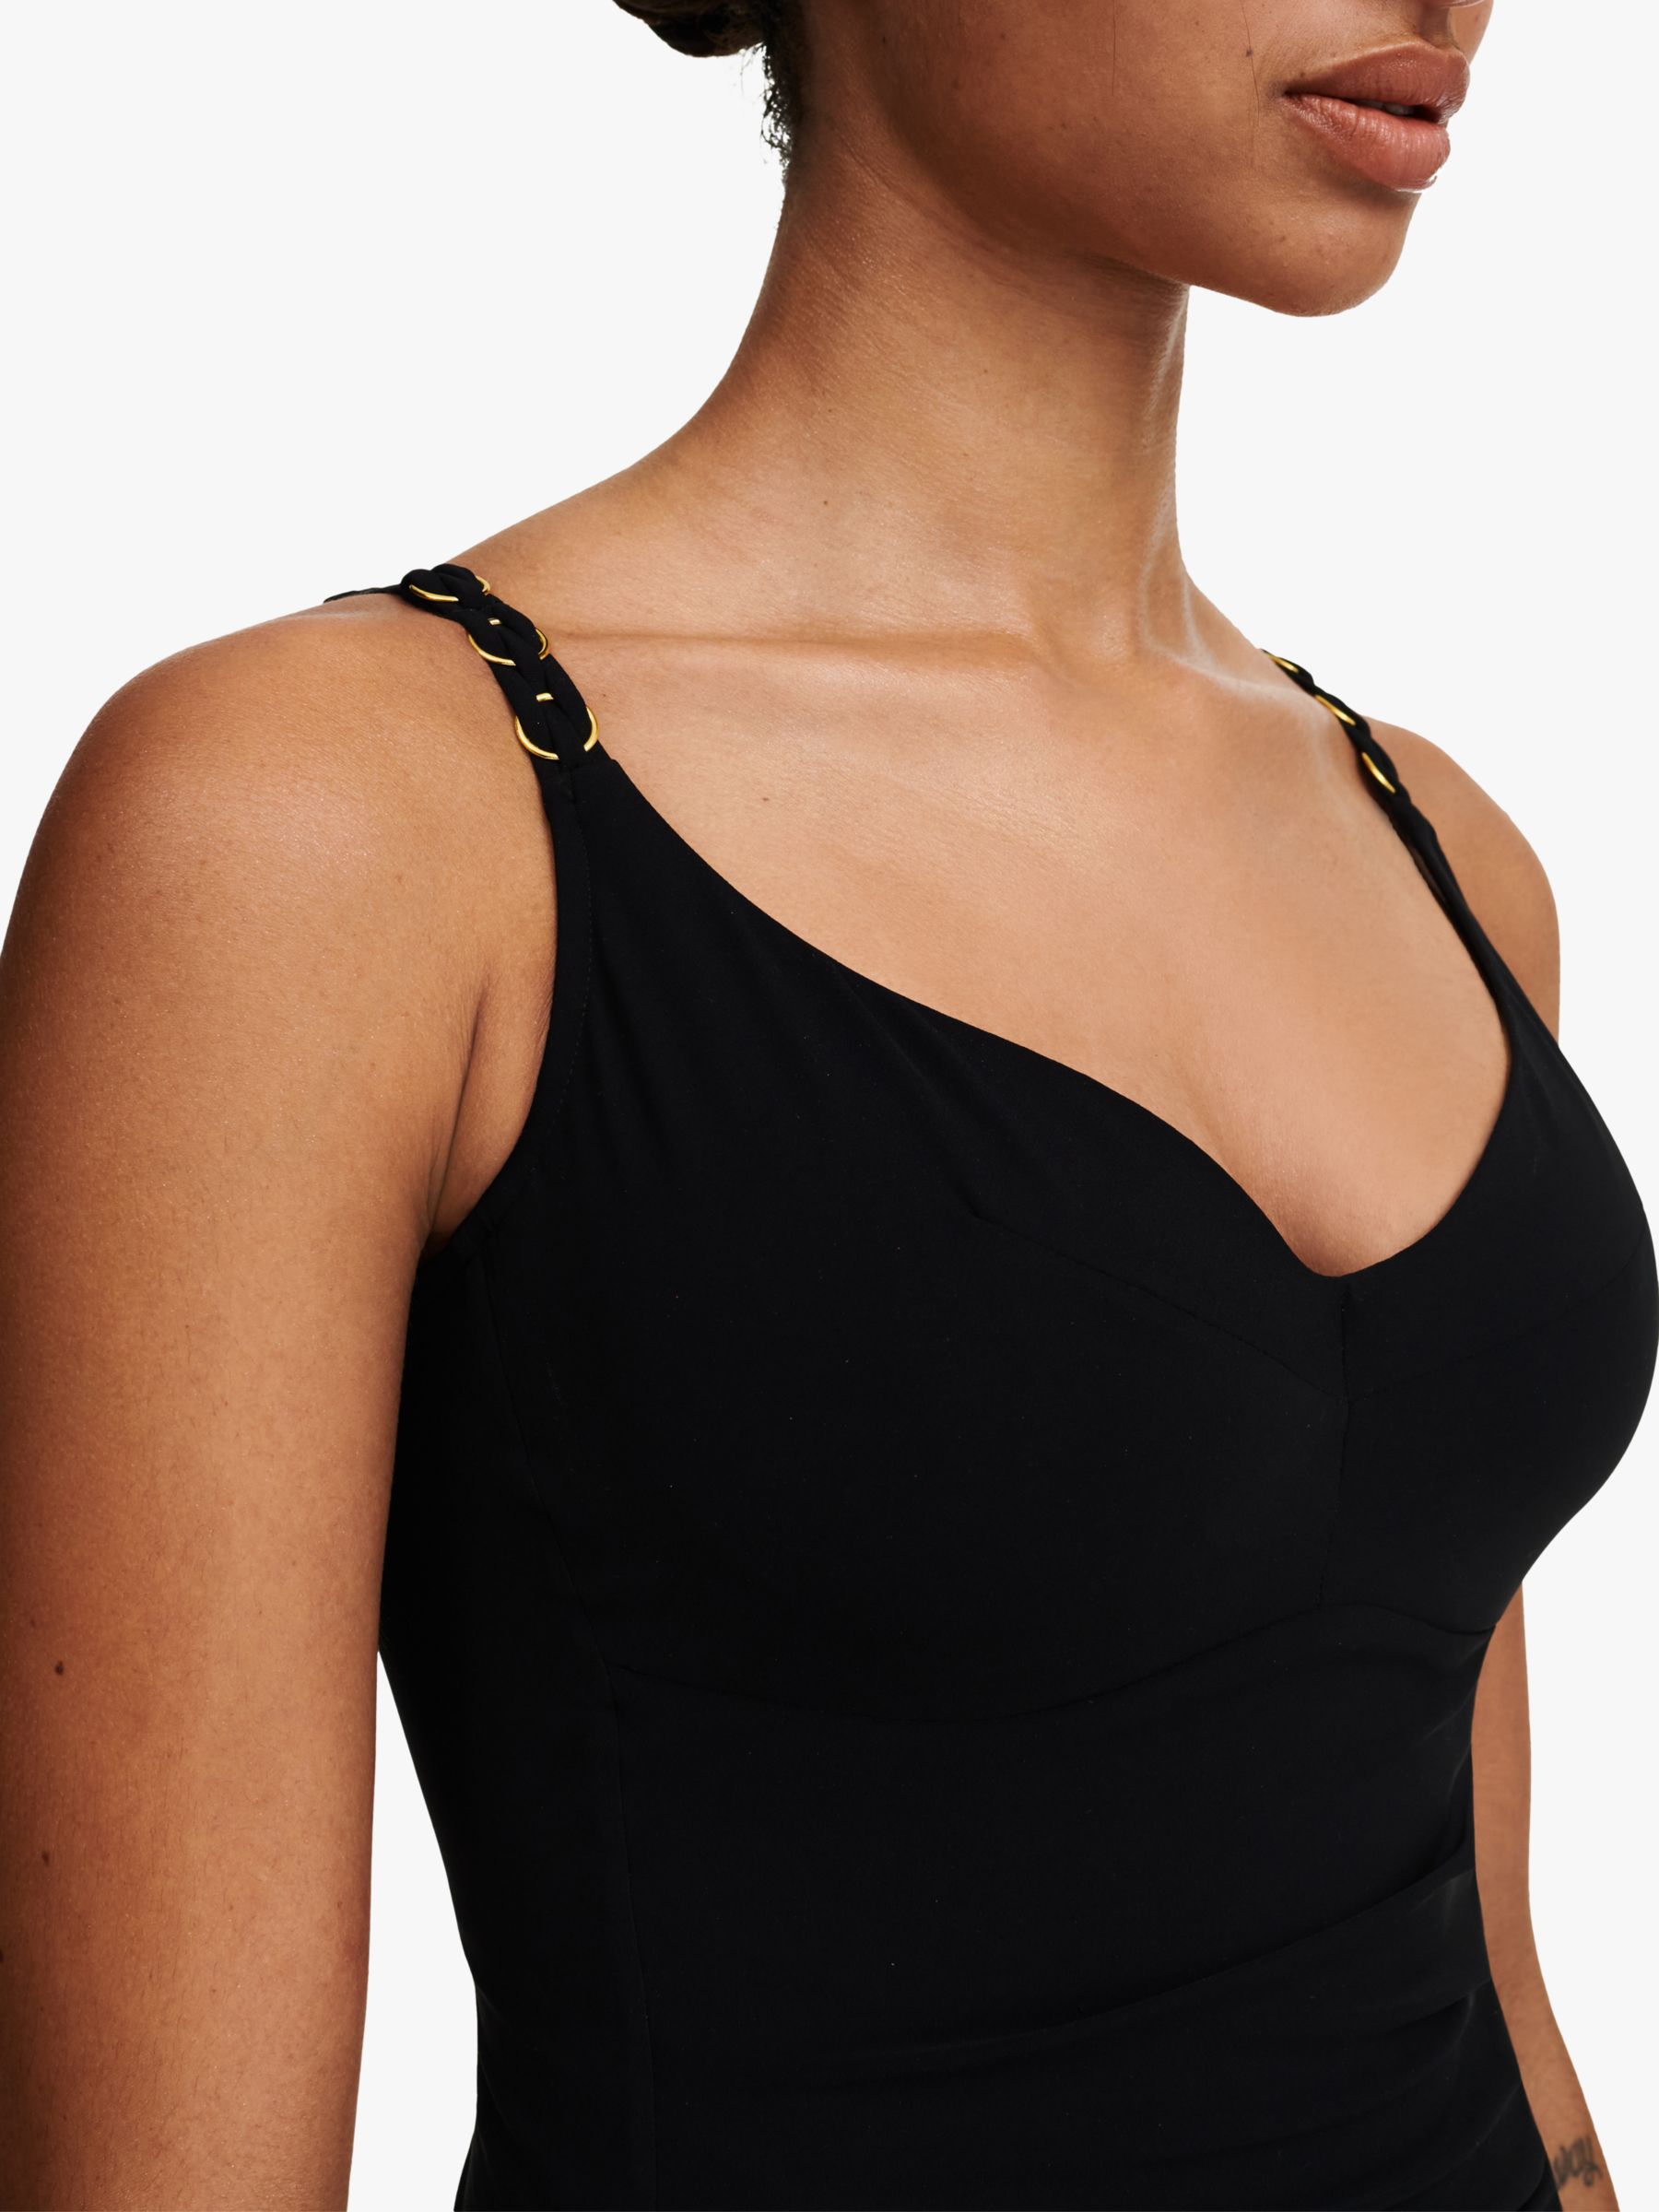 Buy Chantelle Emblem Underwired Swimsuit, Black Online at johnlewis.com